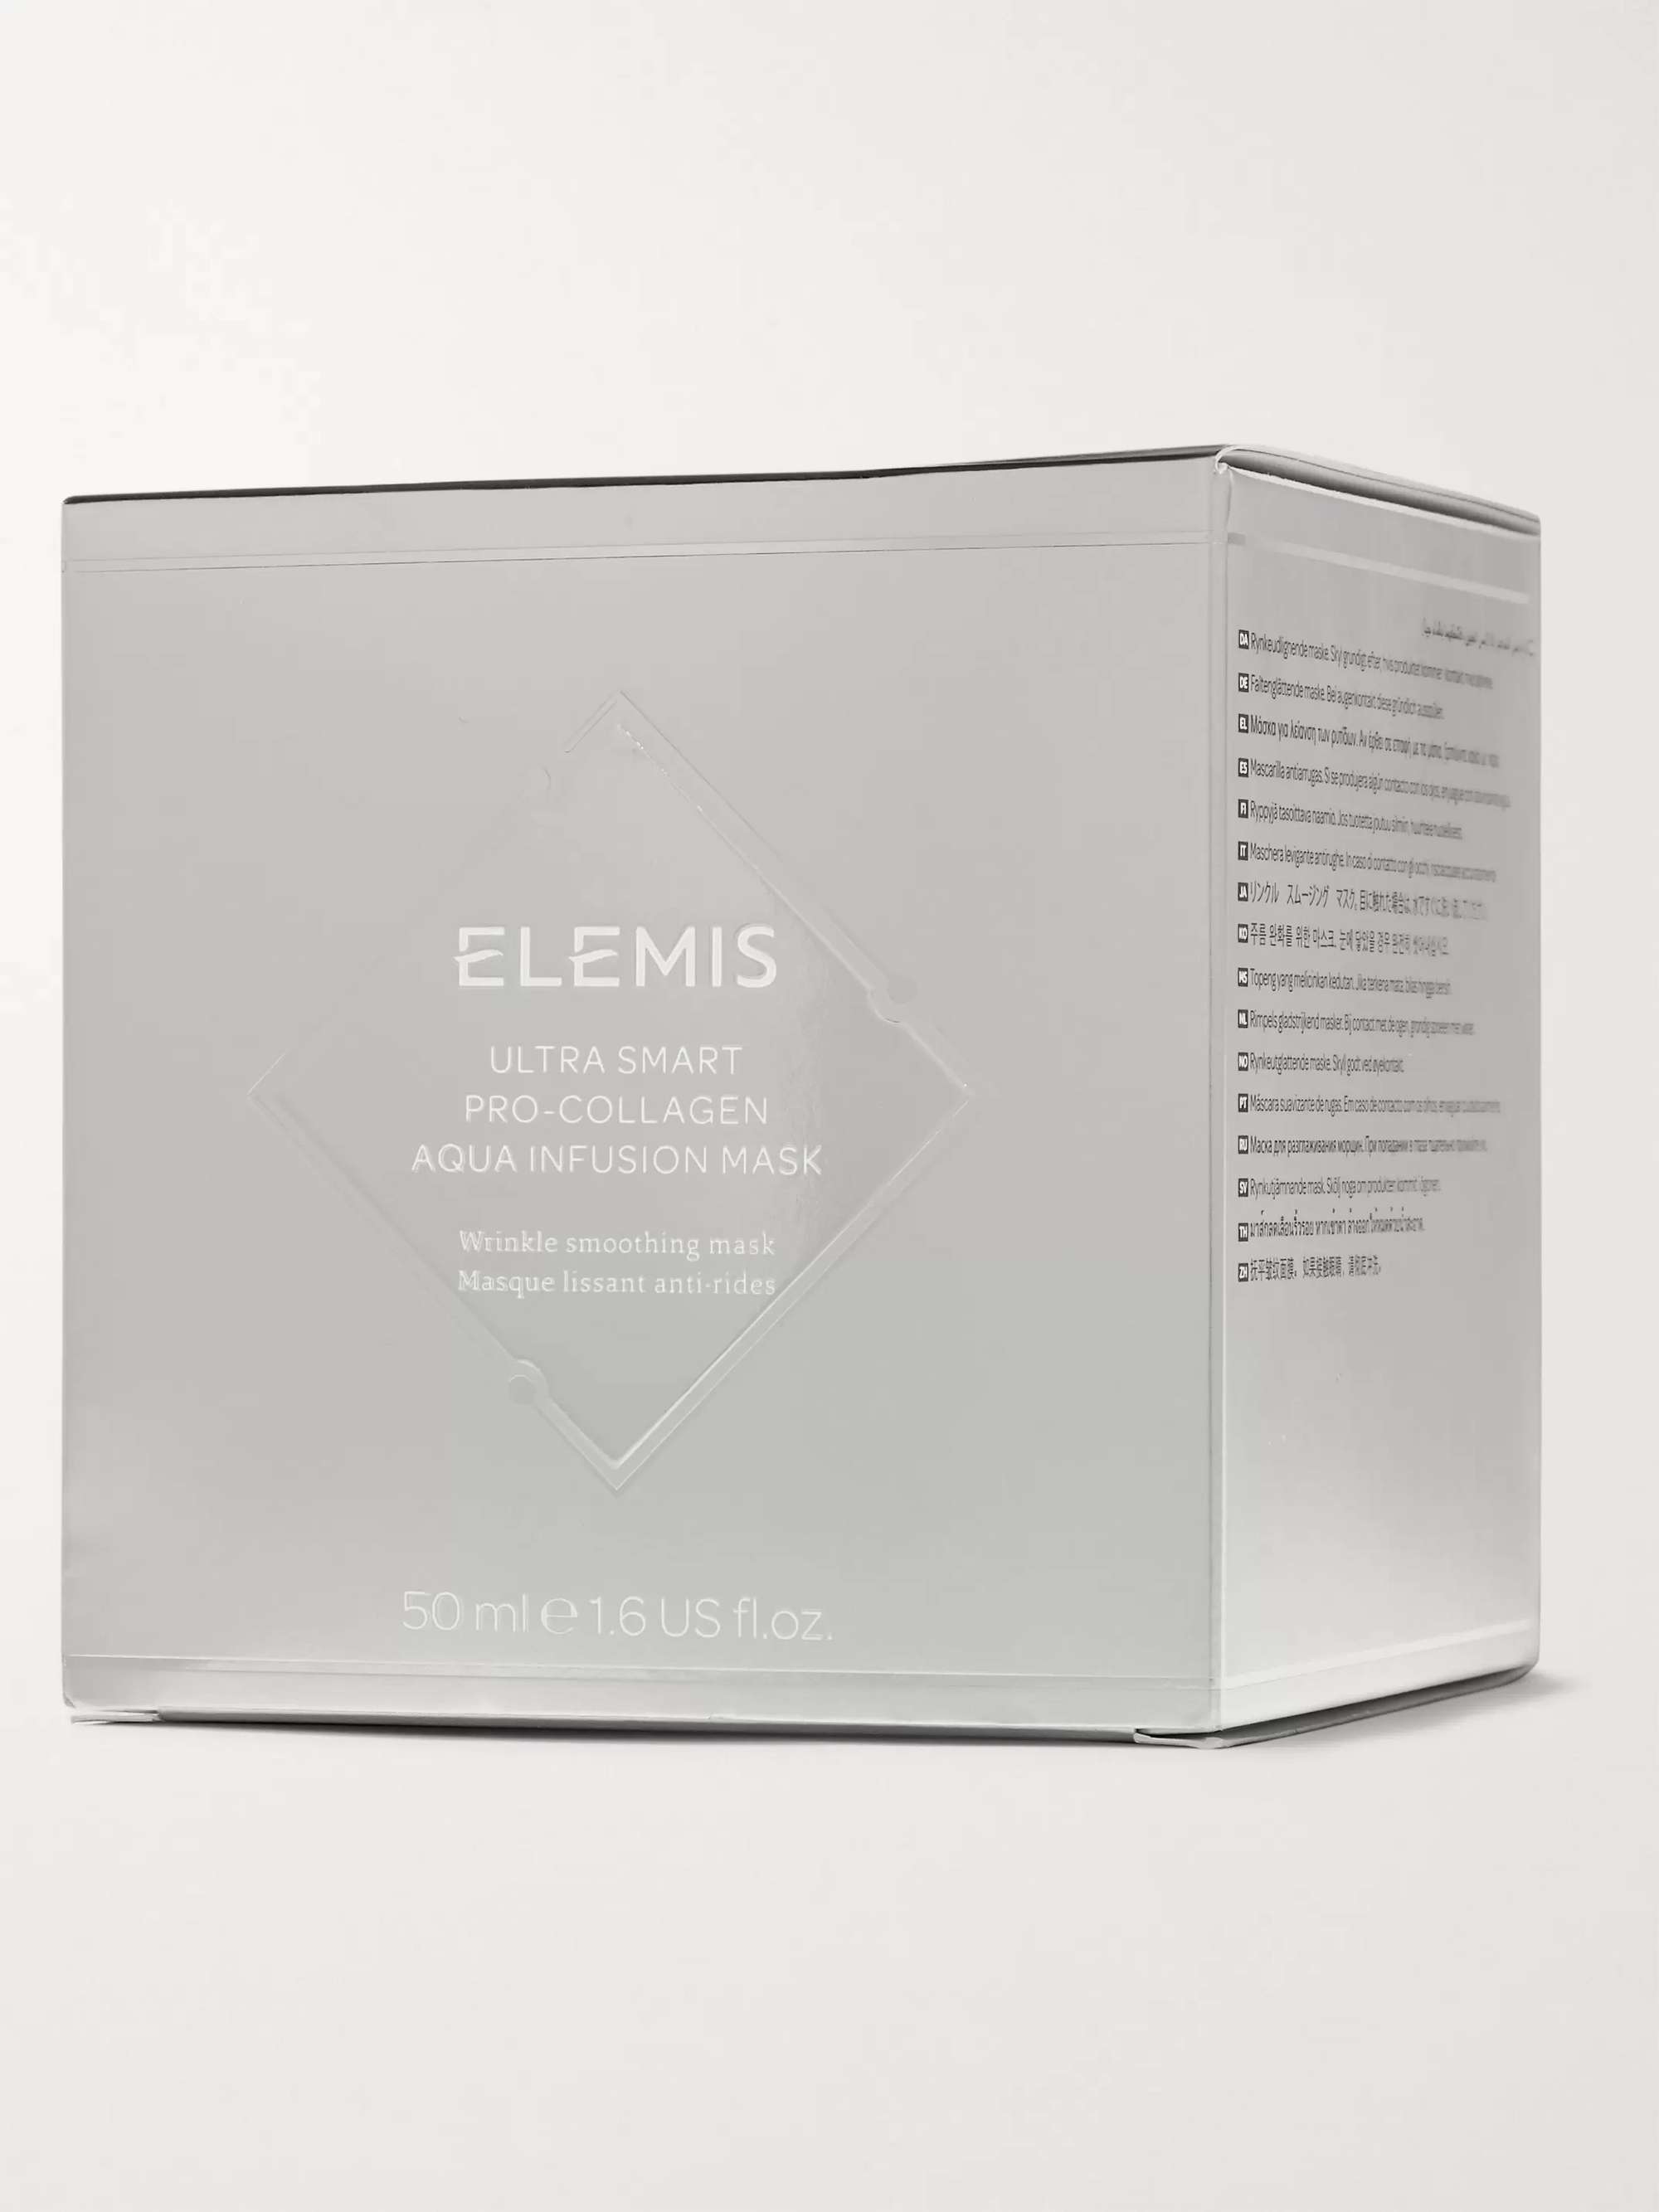 ELEMIS Ultra Smart Pro-Collagen Aqua Infusion Mask, 50ml